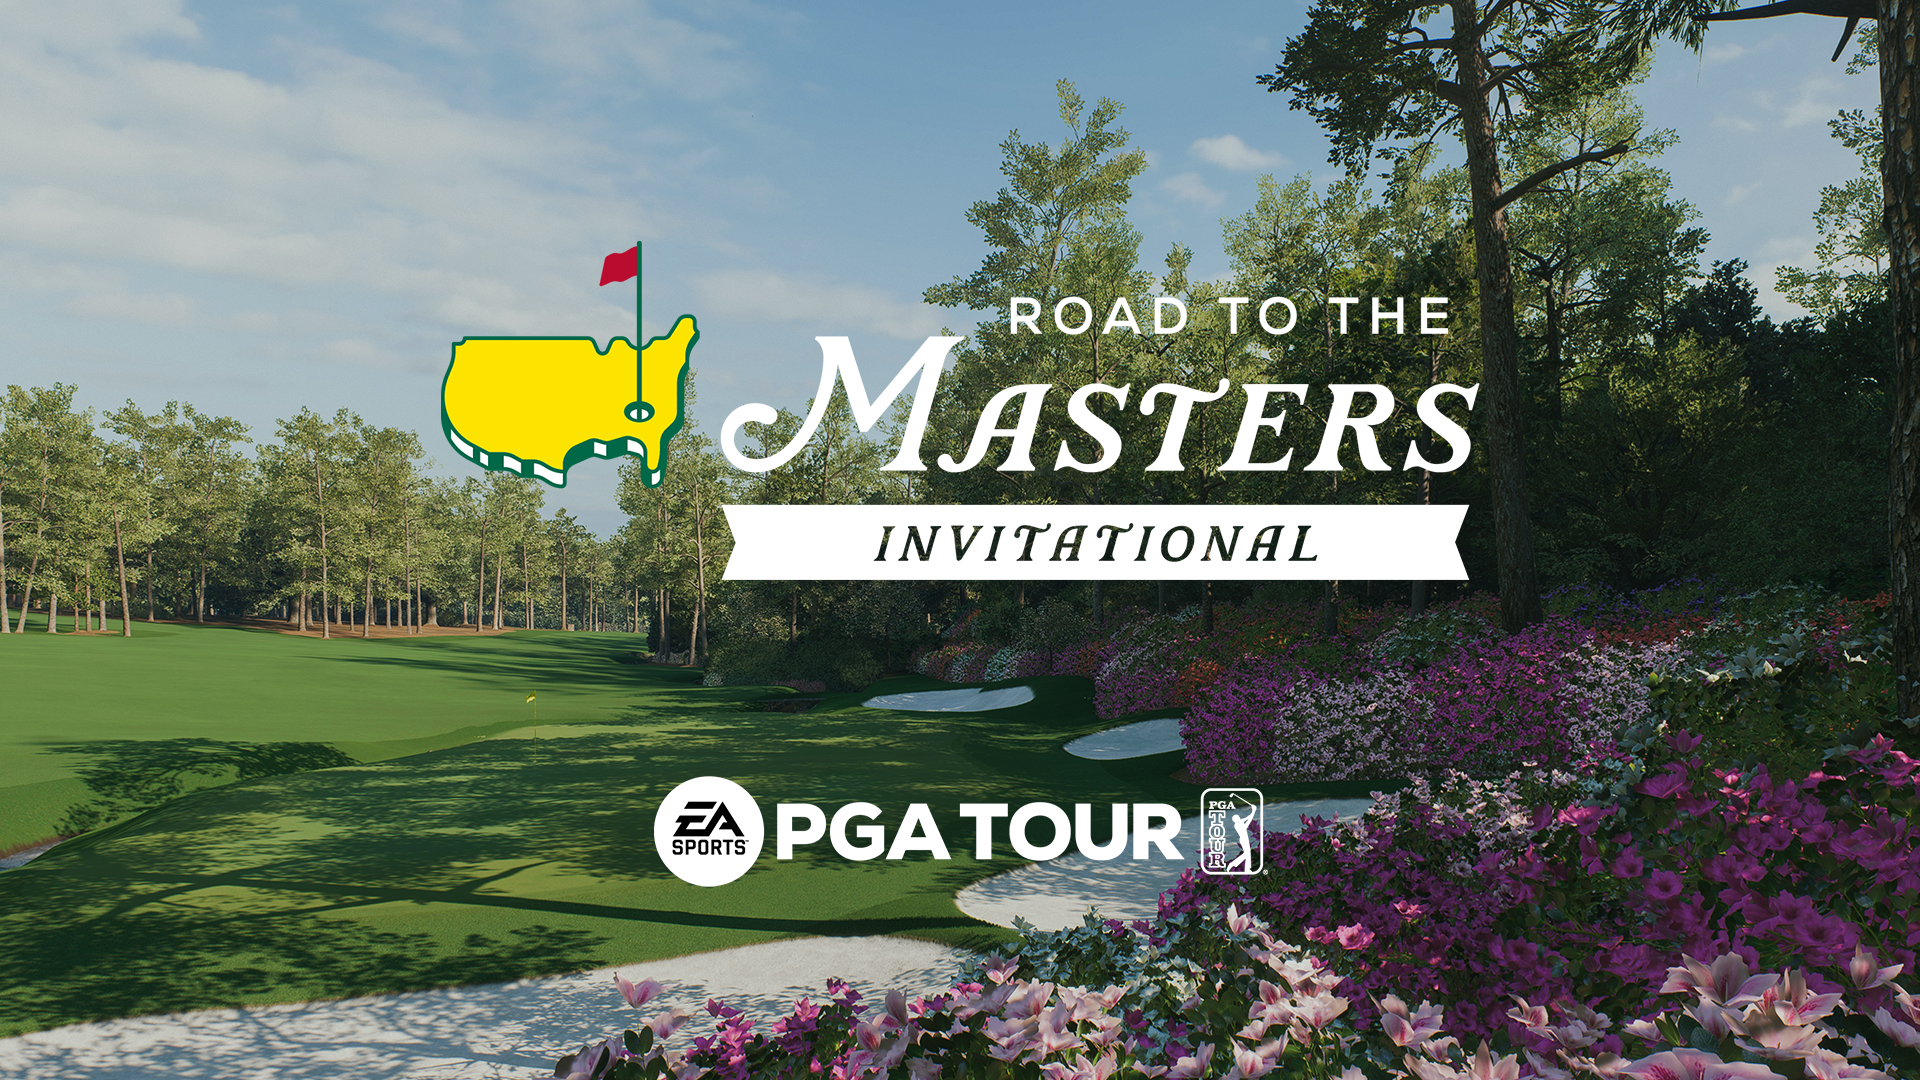 EA Sports PGA Tour Live Streaming Road to the Masters Invitational April 2